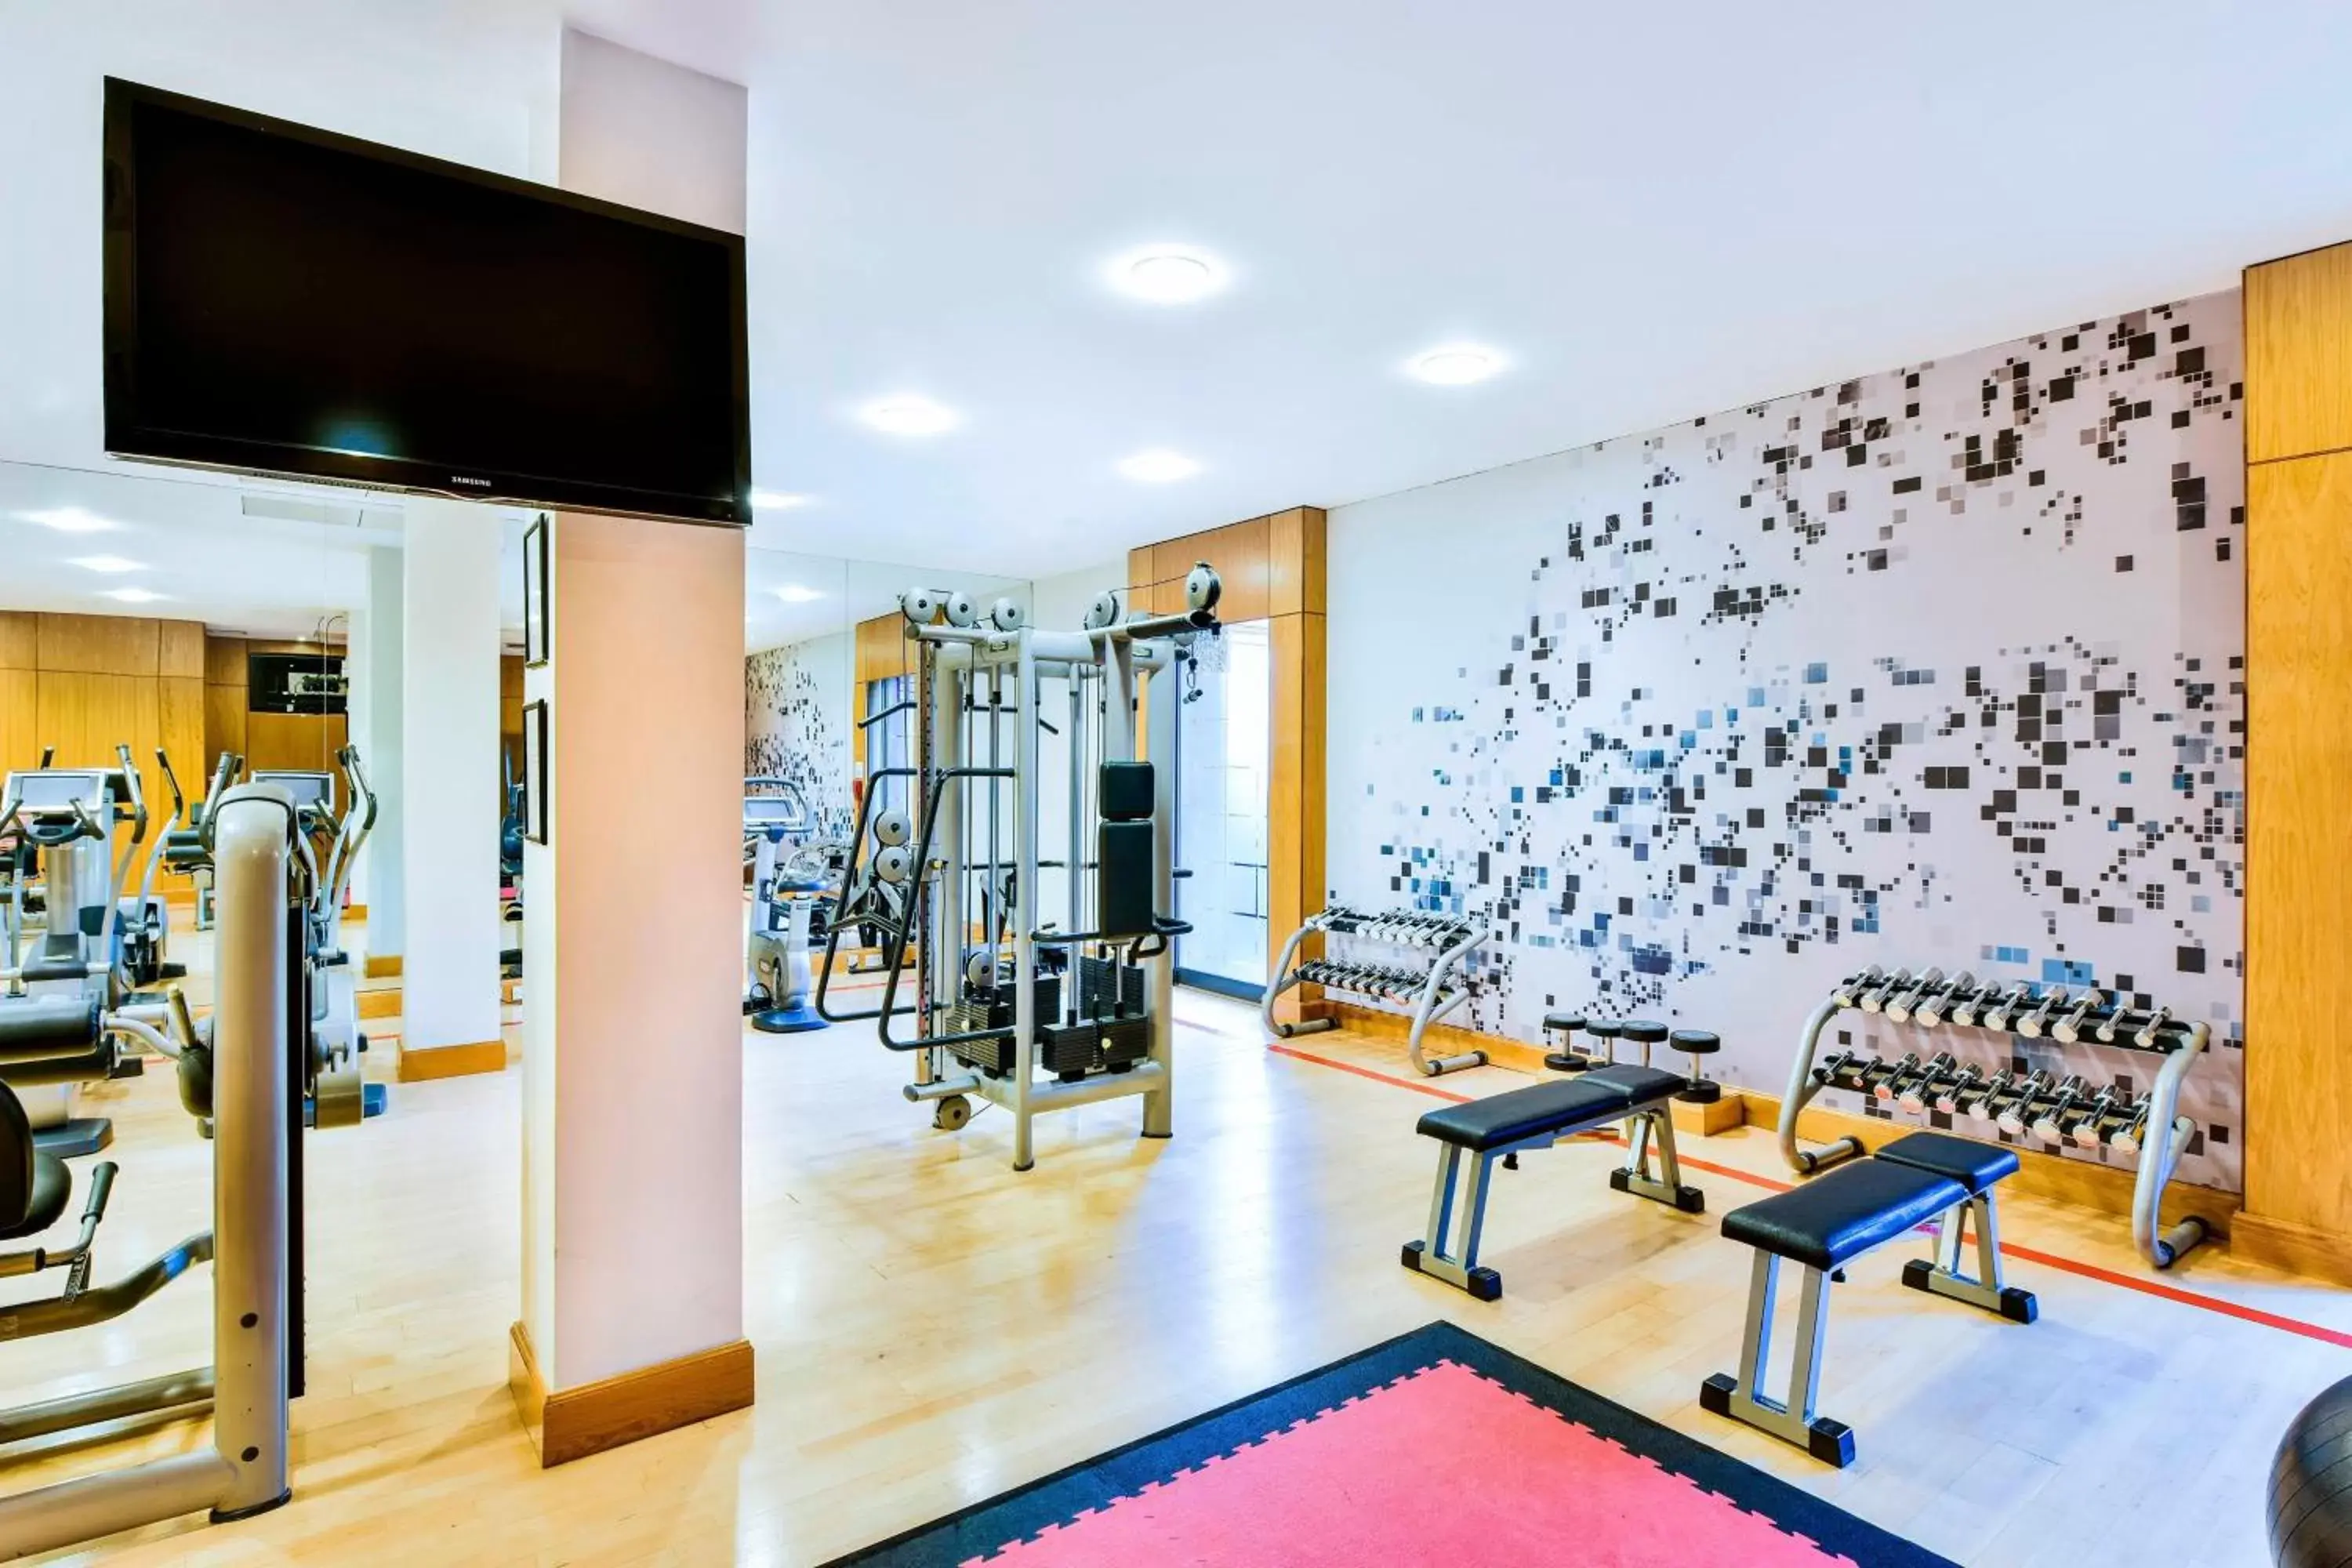 Fitness centre/facilities, Fitness Center/Facilities in Sheraton Skyline Hotel London Heathrow